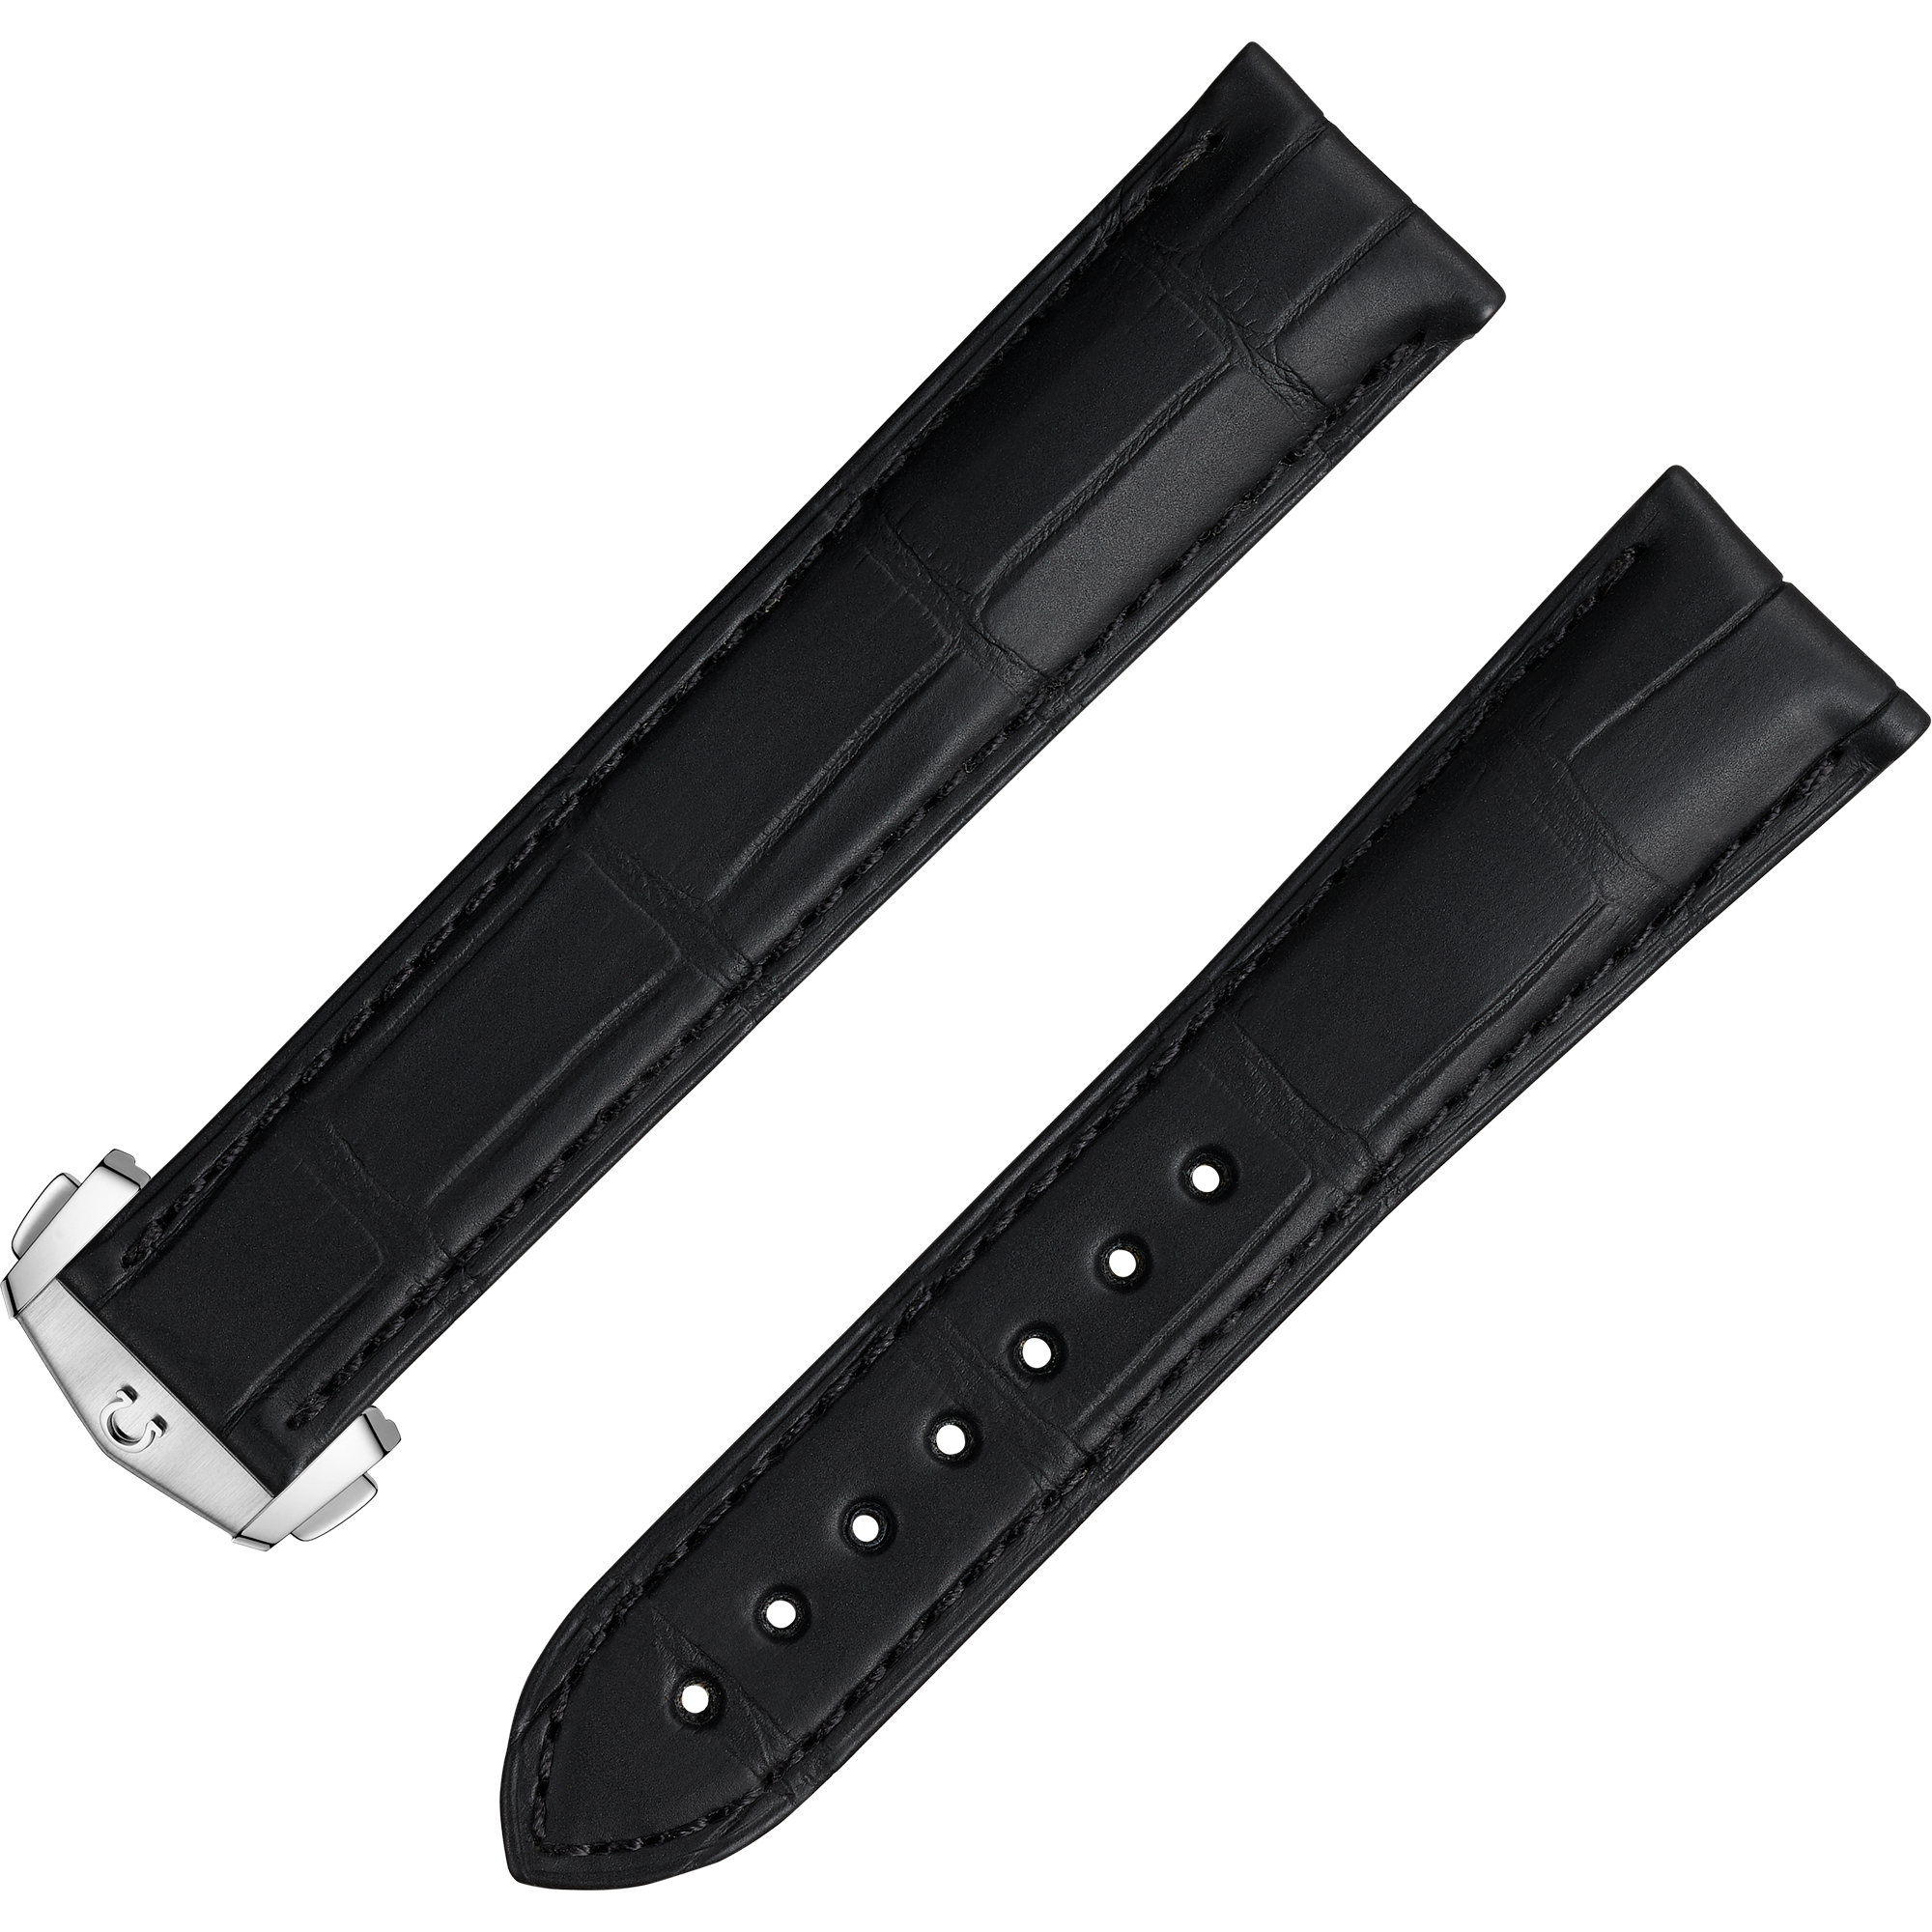 Two-piece strap - Black alligator leather strap with foldover clasp - 032CUZ007467W